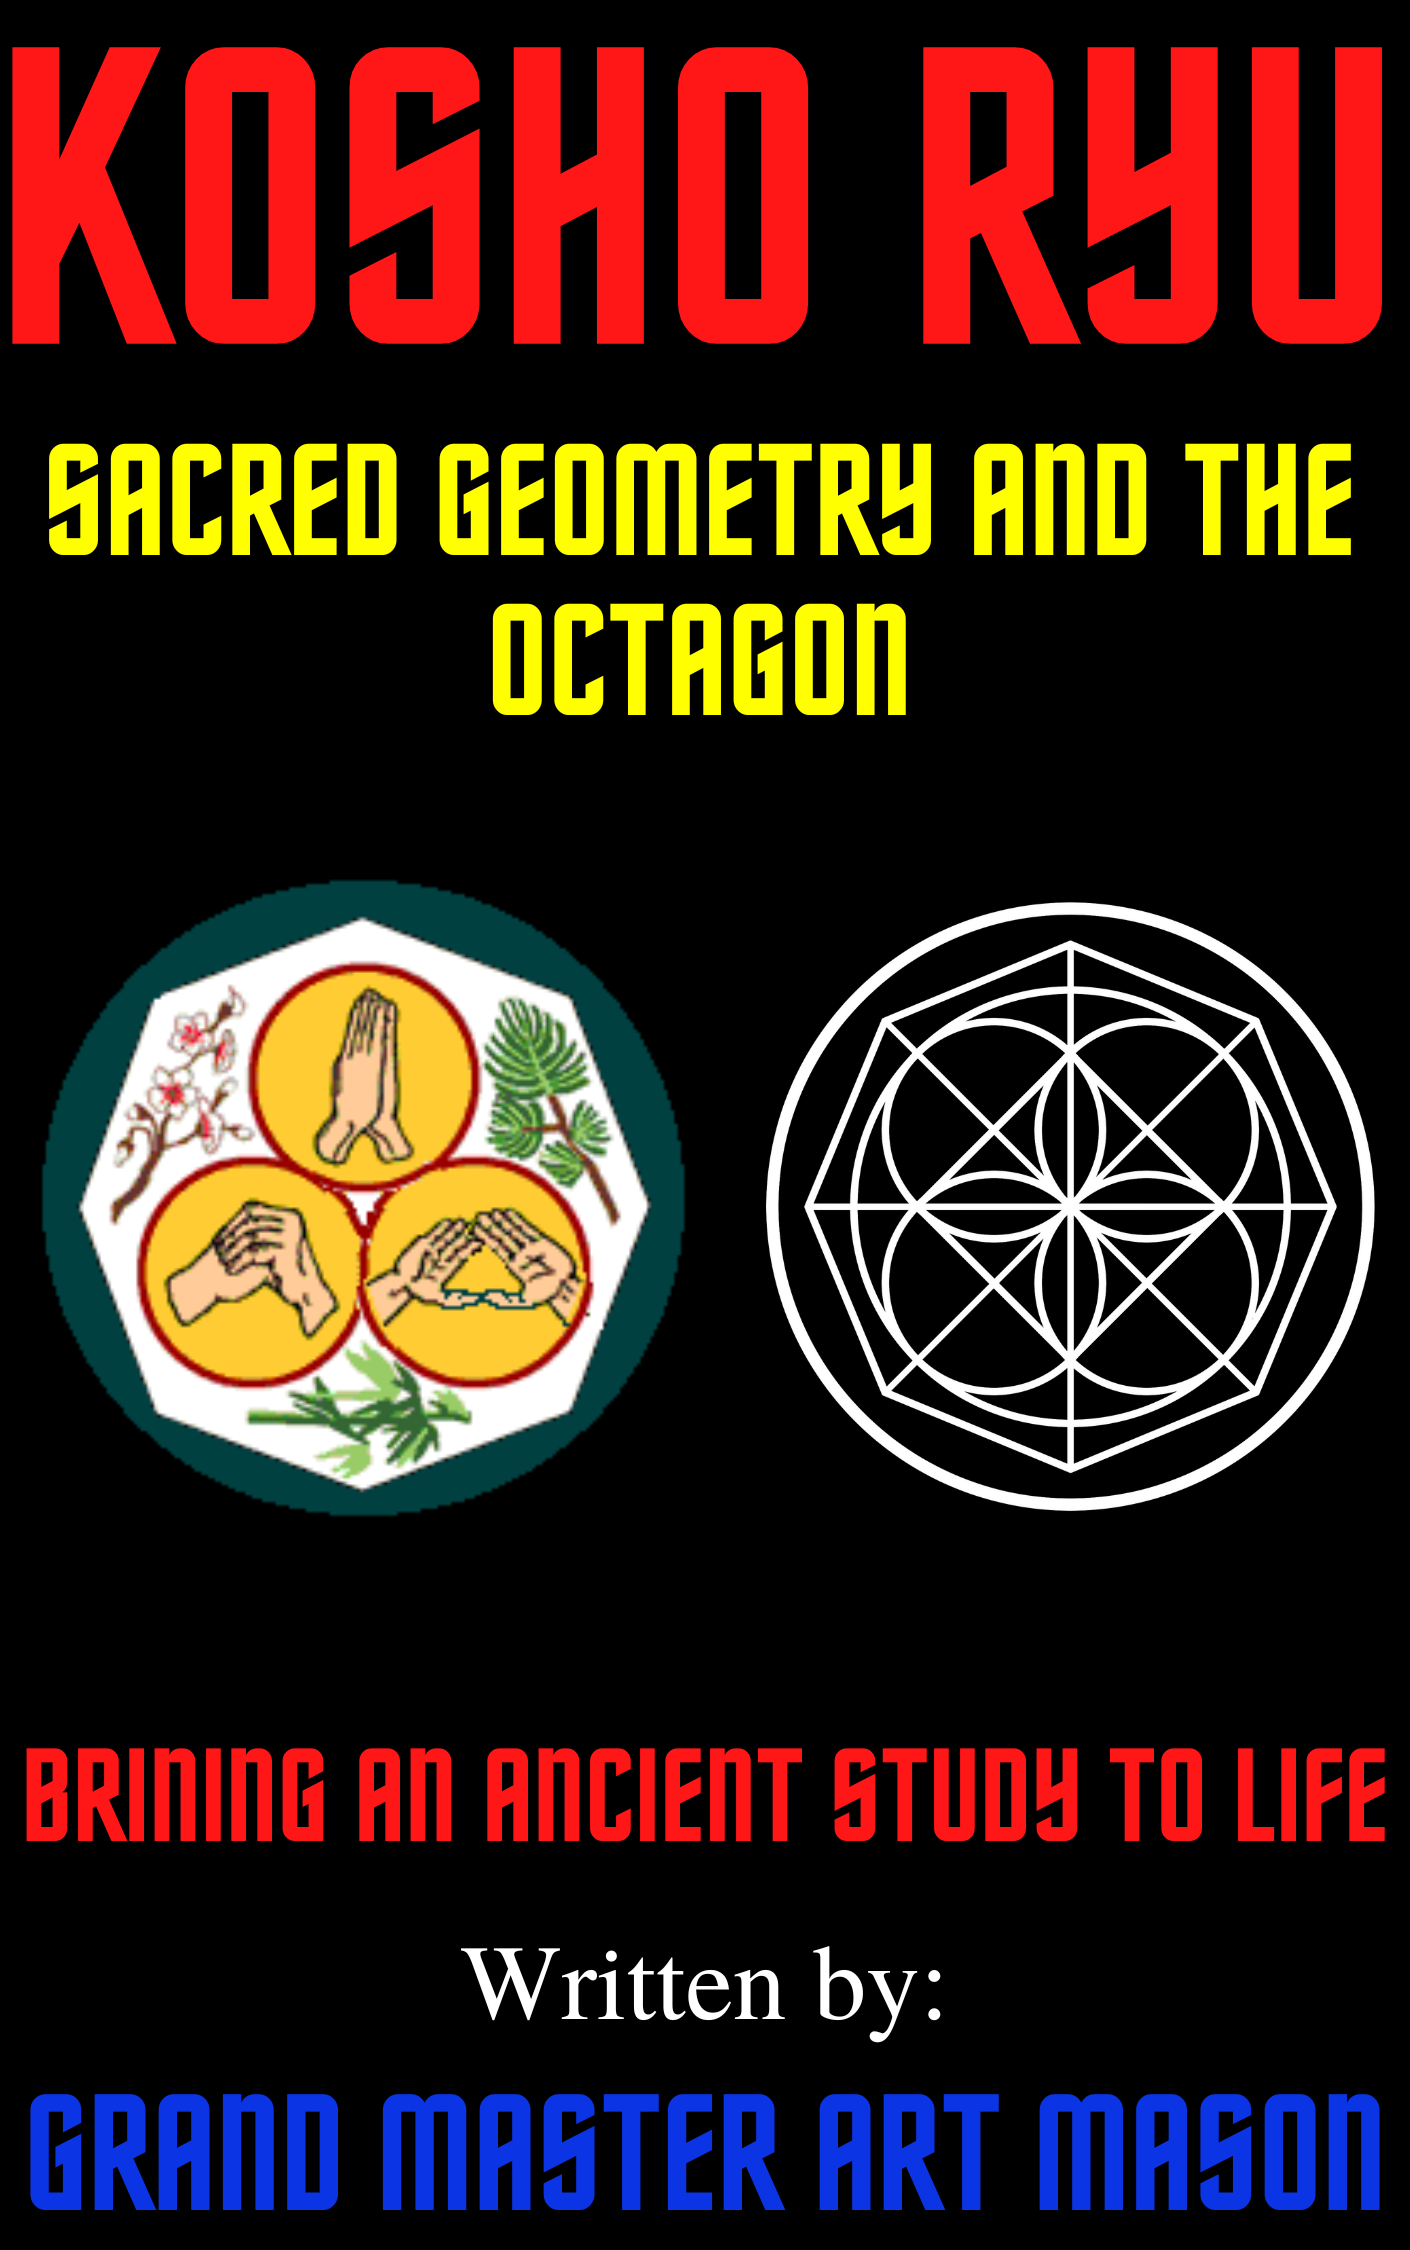 Kosho Ryu Sacred Geometry and the Octagon